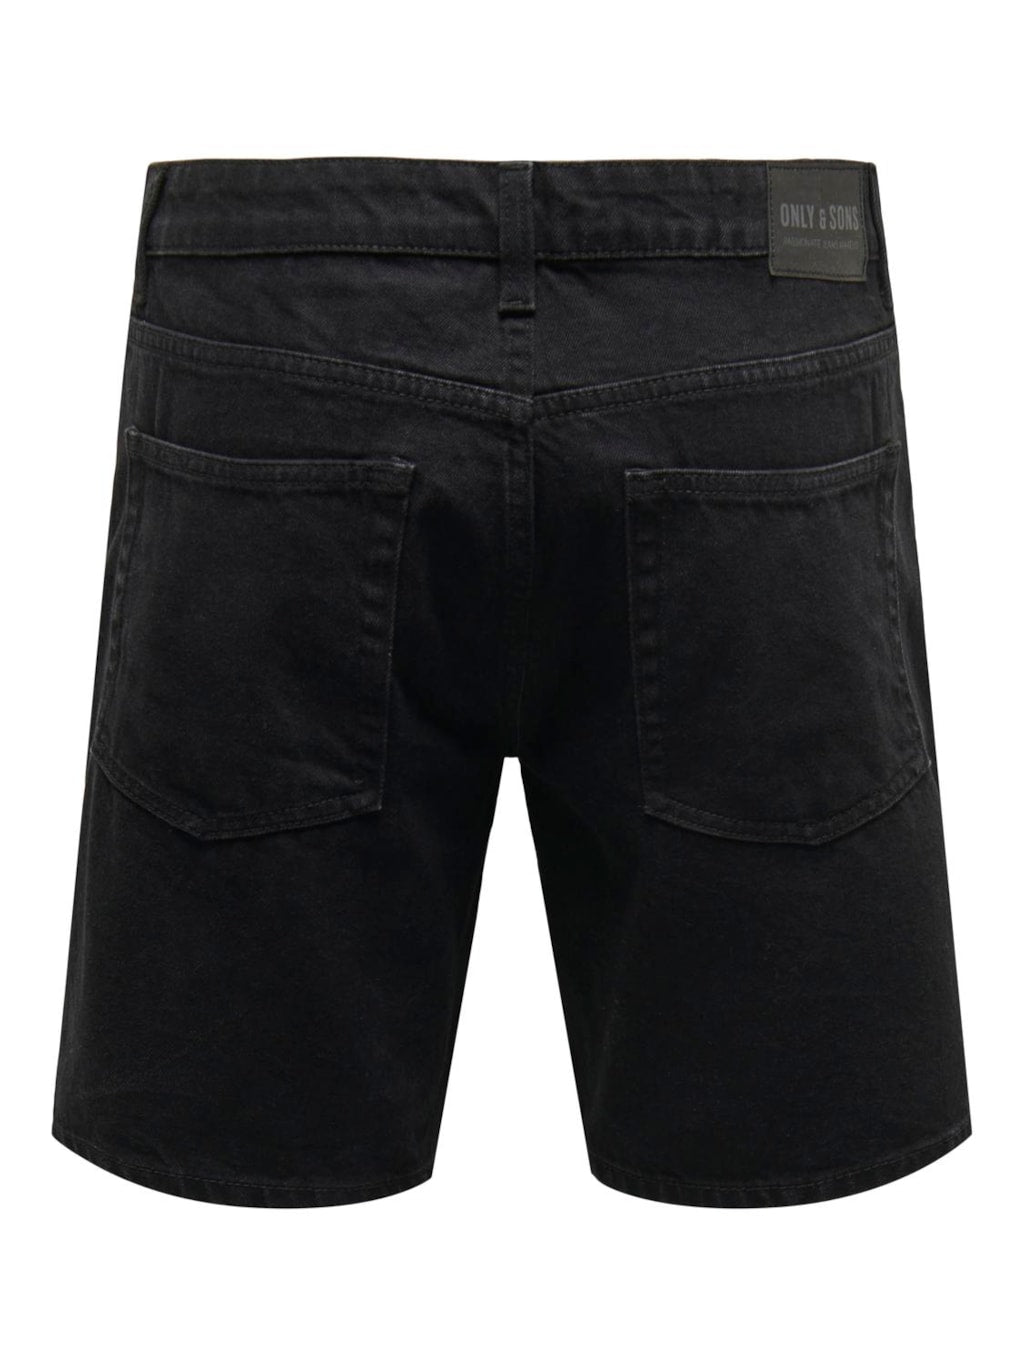 Only & Sons Edge Denim Shorts Black